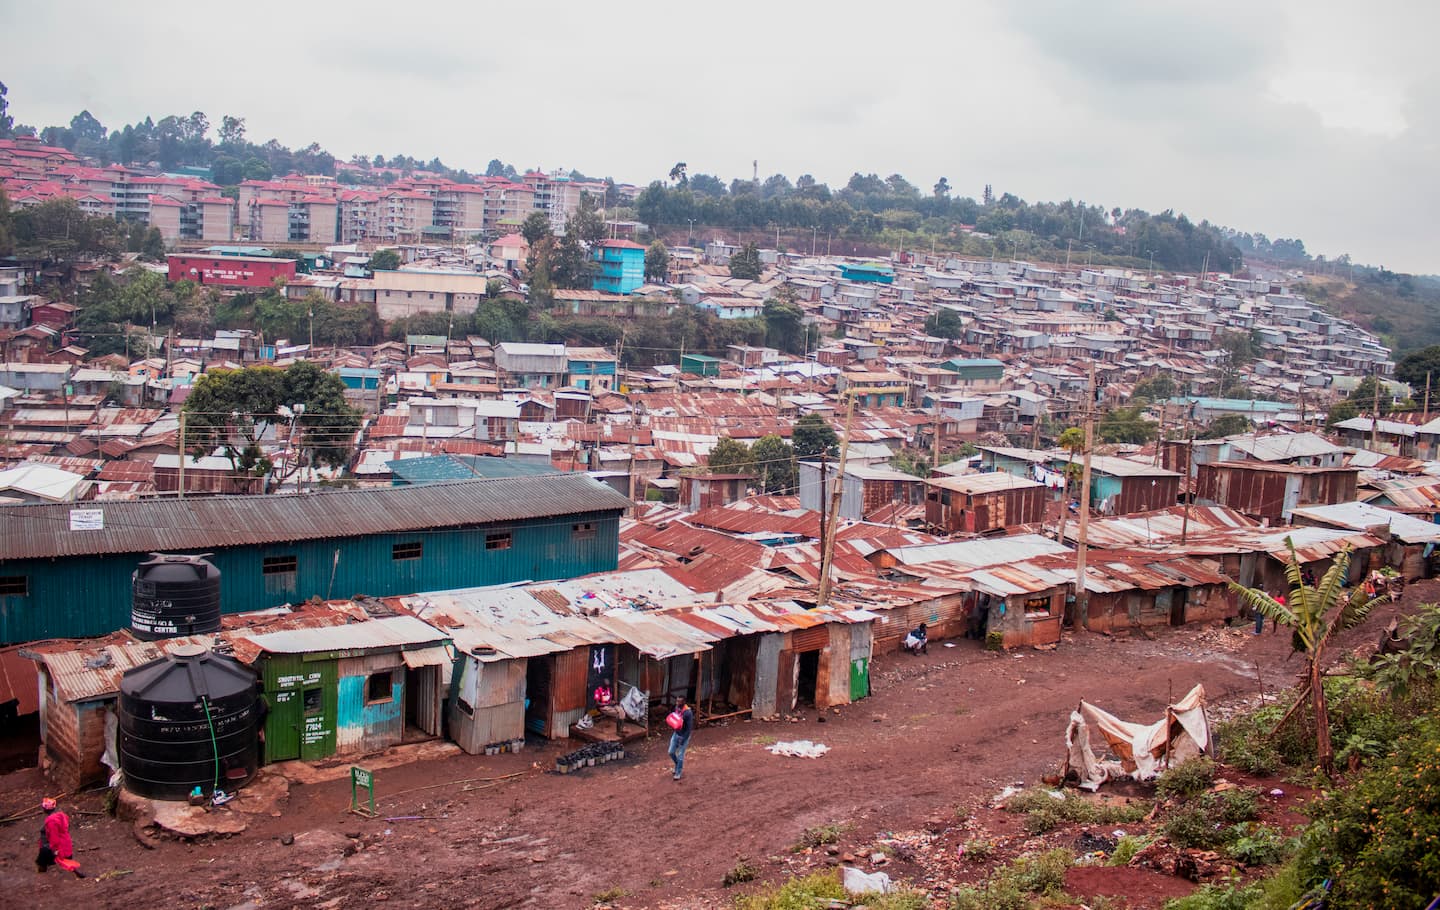 The effects of COVID-19 in Kibera